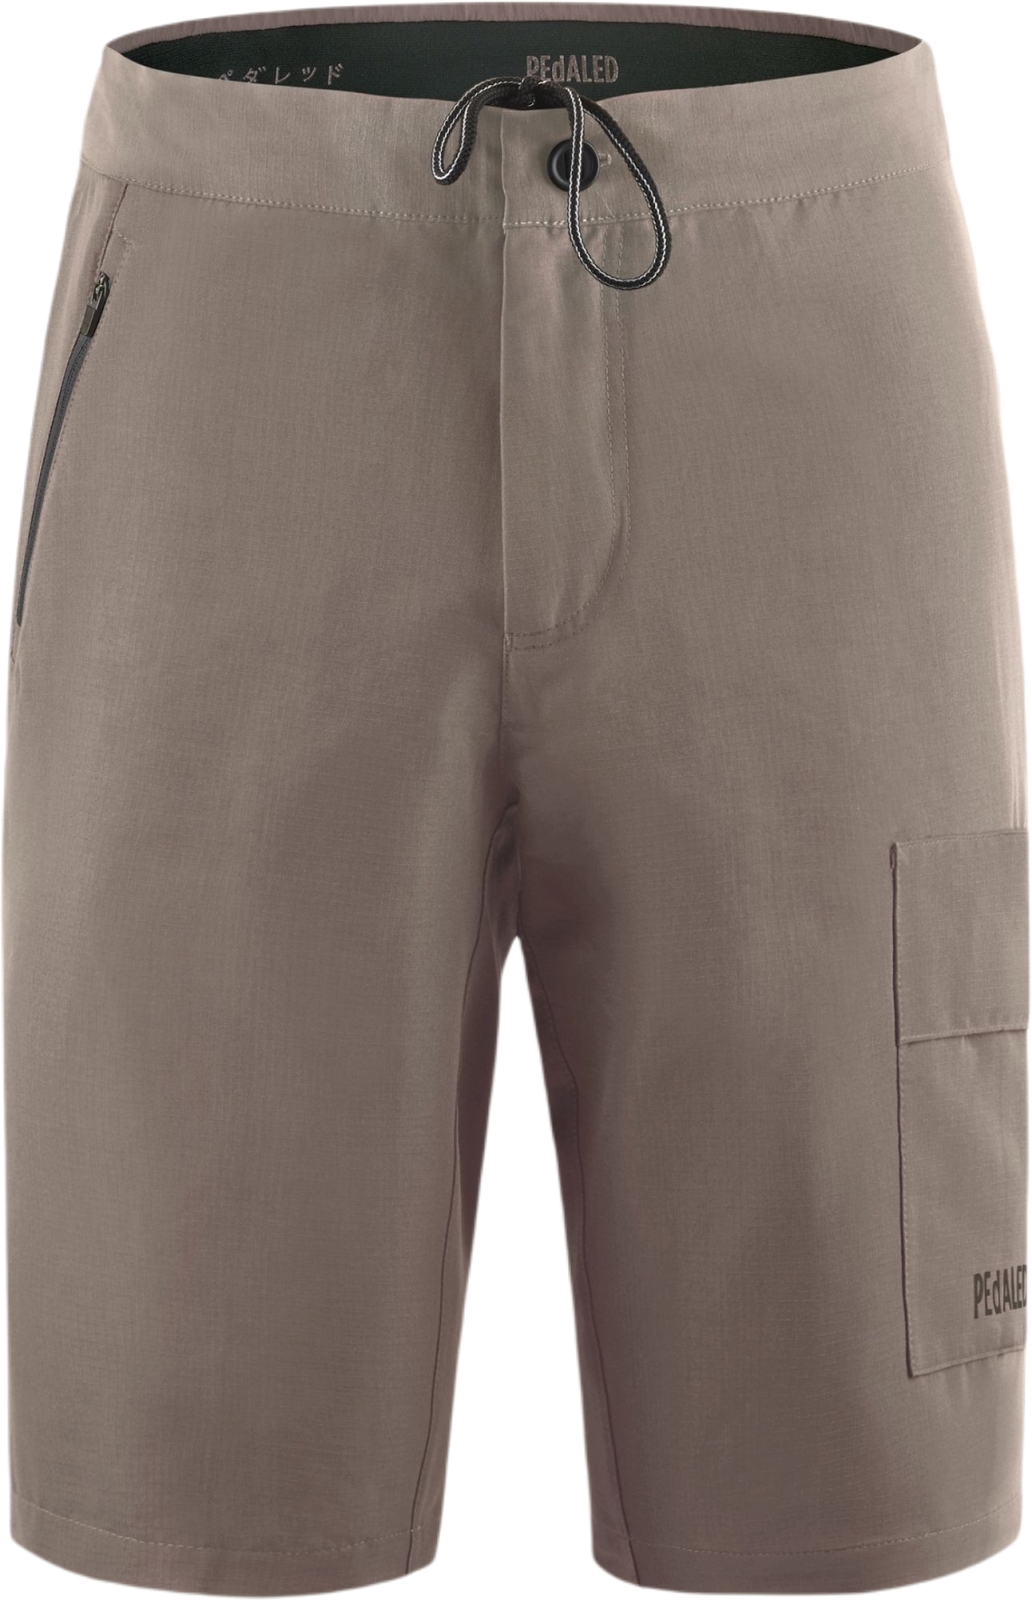 E-shop PEdALED Jary Shorts - walnut L